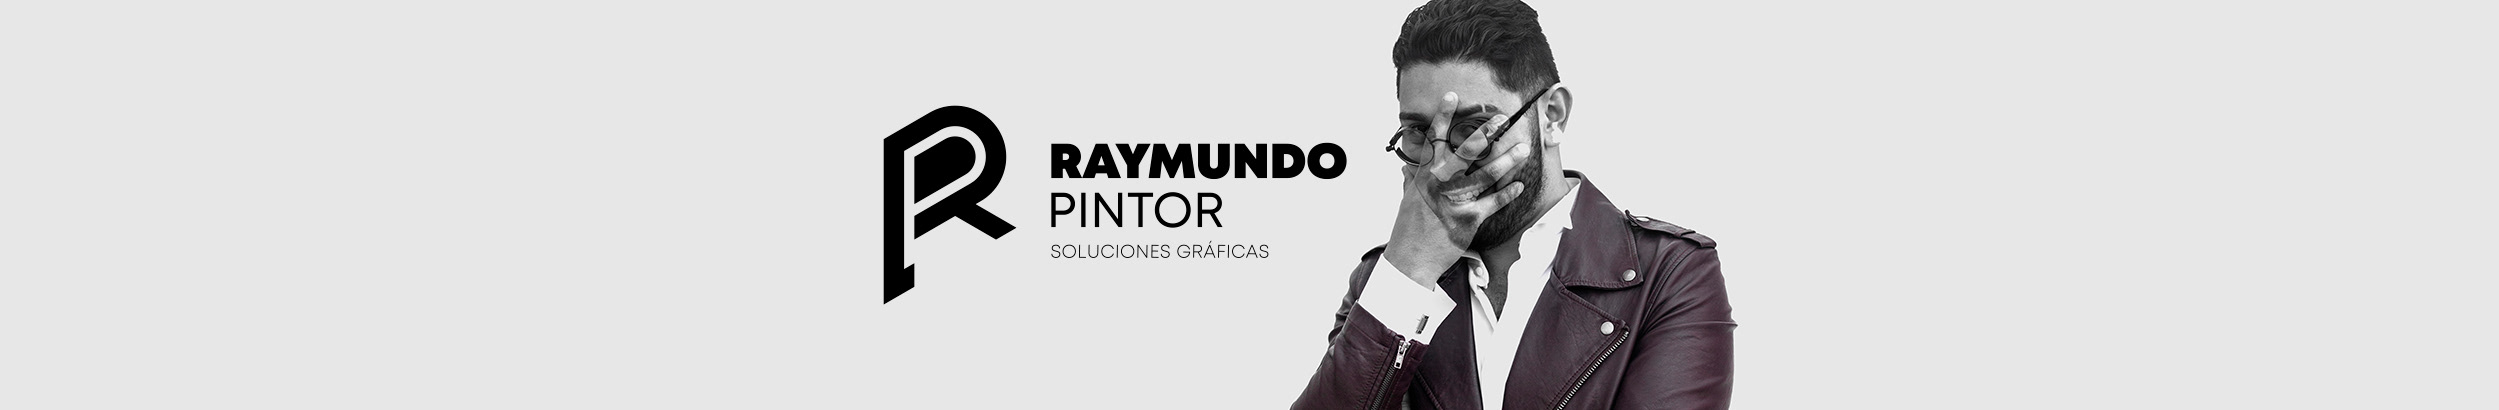 Raymundo Pintor Morales's profile banner